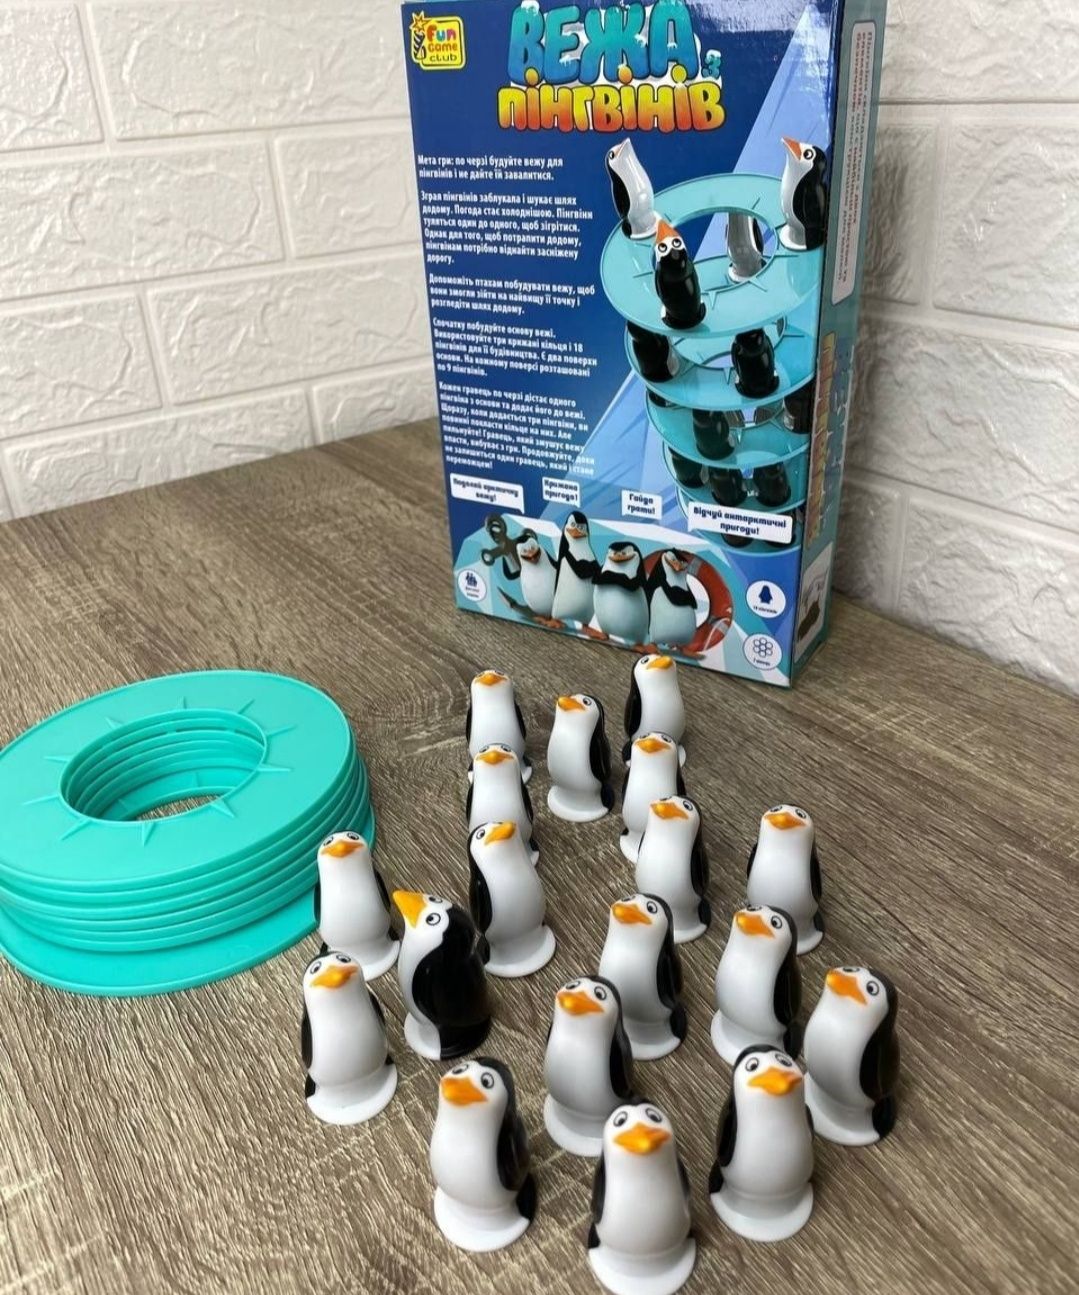 АКЦІЯ! Розважальна гра «Вежа пінгвінів» 86682, 18 пінгвінів, 7 кілець